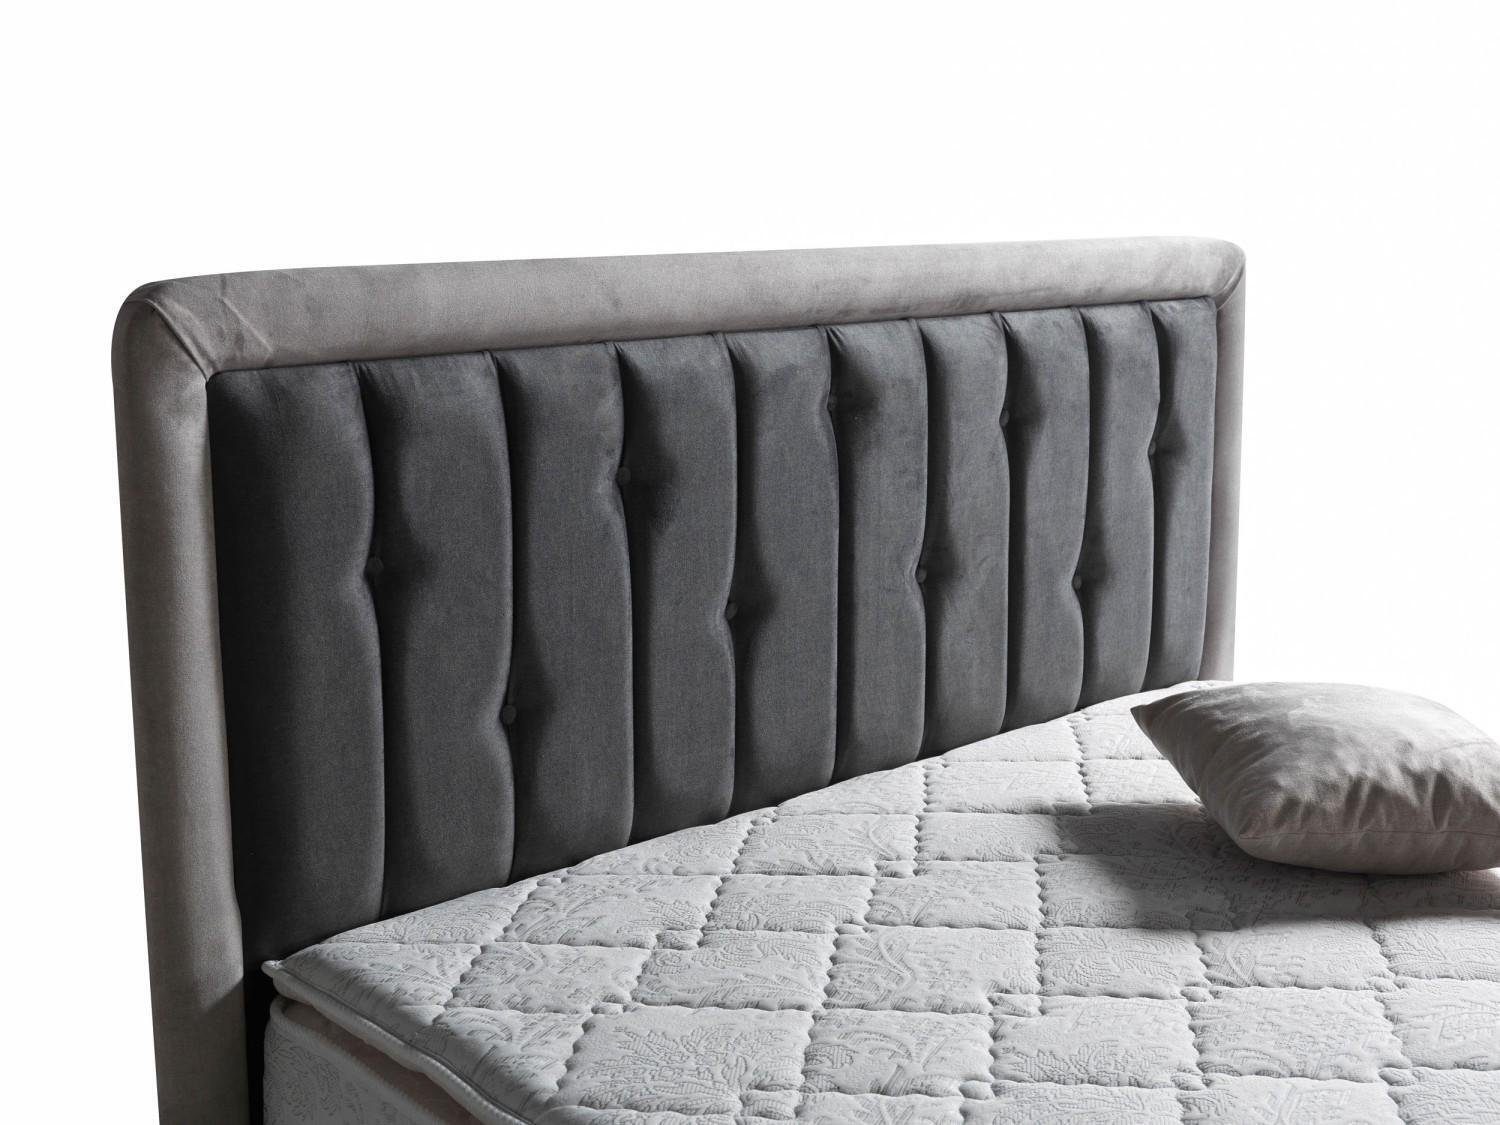 JVmoebel Bett Europe Möbel Doppelbett Made Luxus (Bett), 180x200 In Polster Betten Design Schlafzimmer Bett